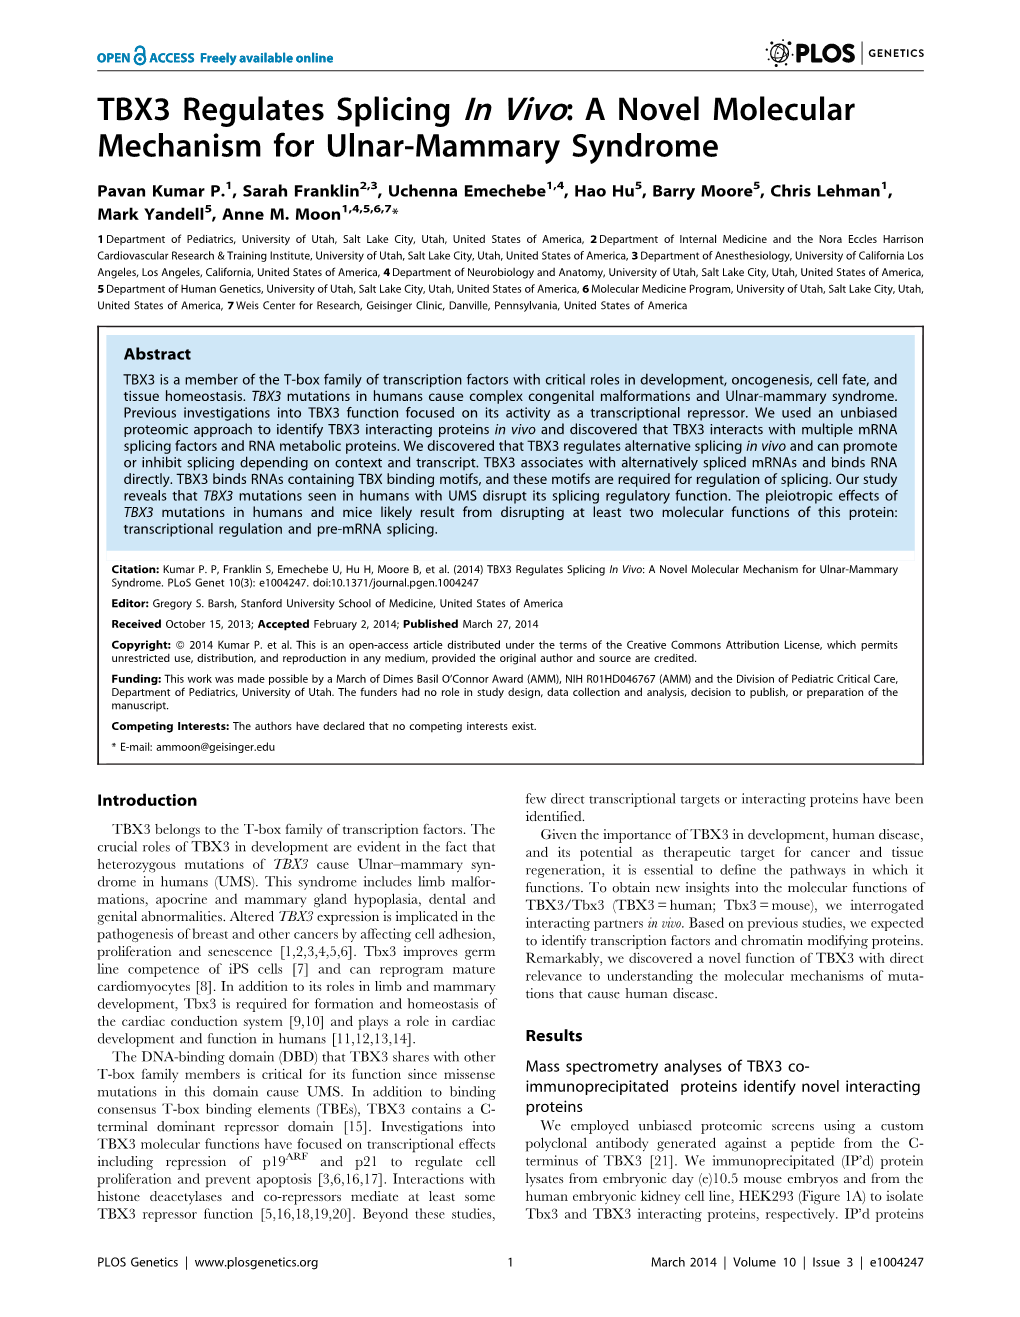 TBX3 Regulates Splicing in Vivo: a Novel Molecular Mechanism for Ulnar-Mammary Syndrome